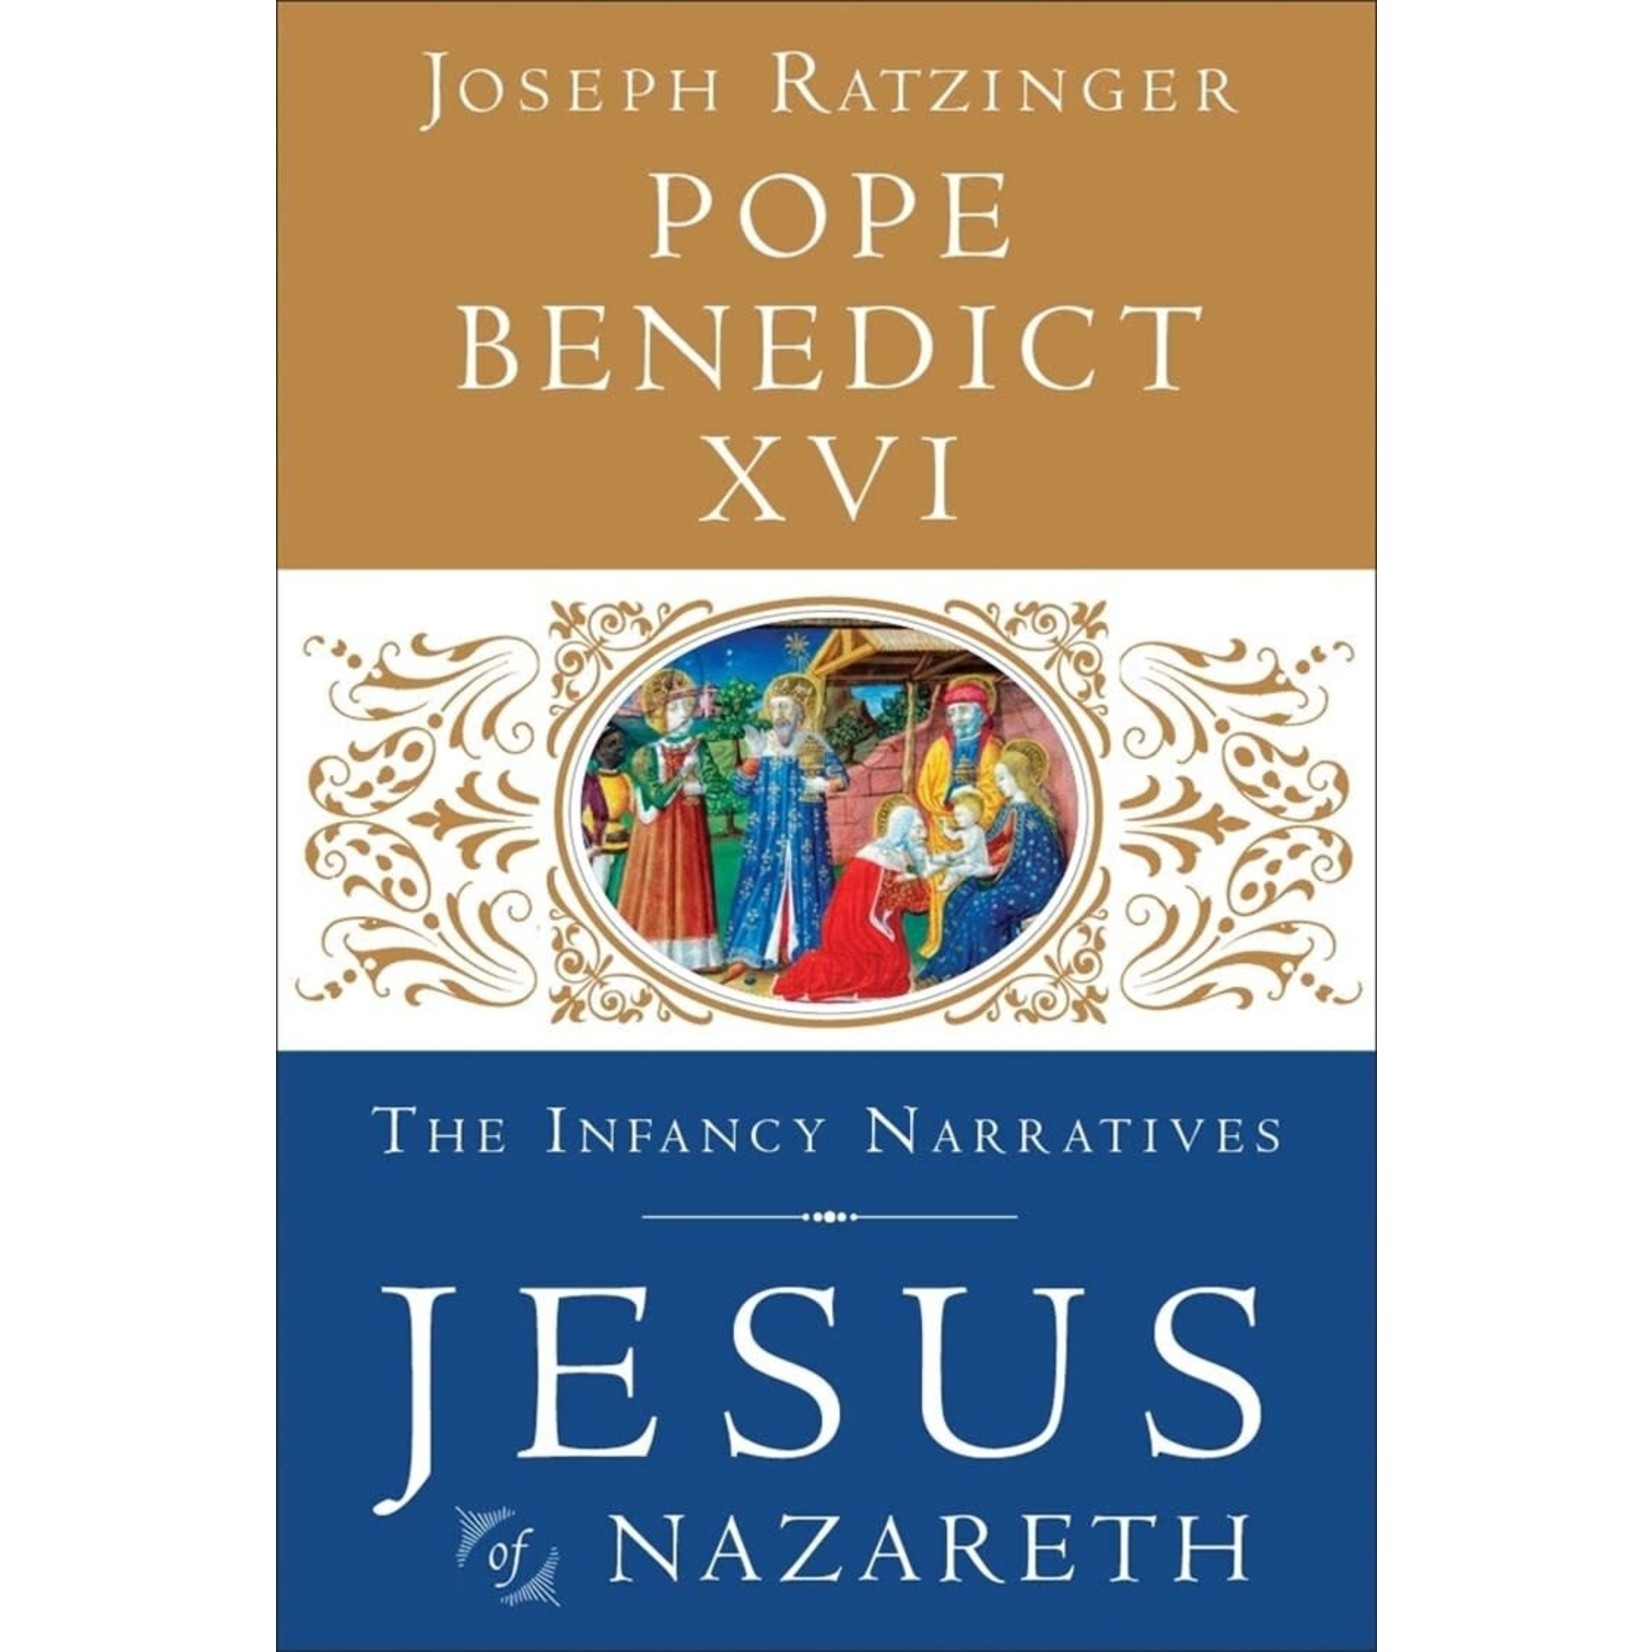 Jesus of Nazareth Vol. 3 The Infancy Narratives